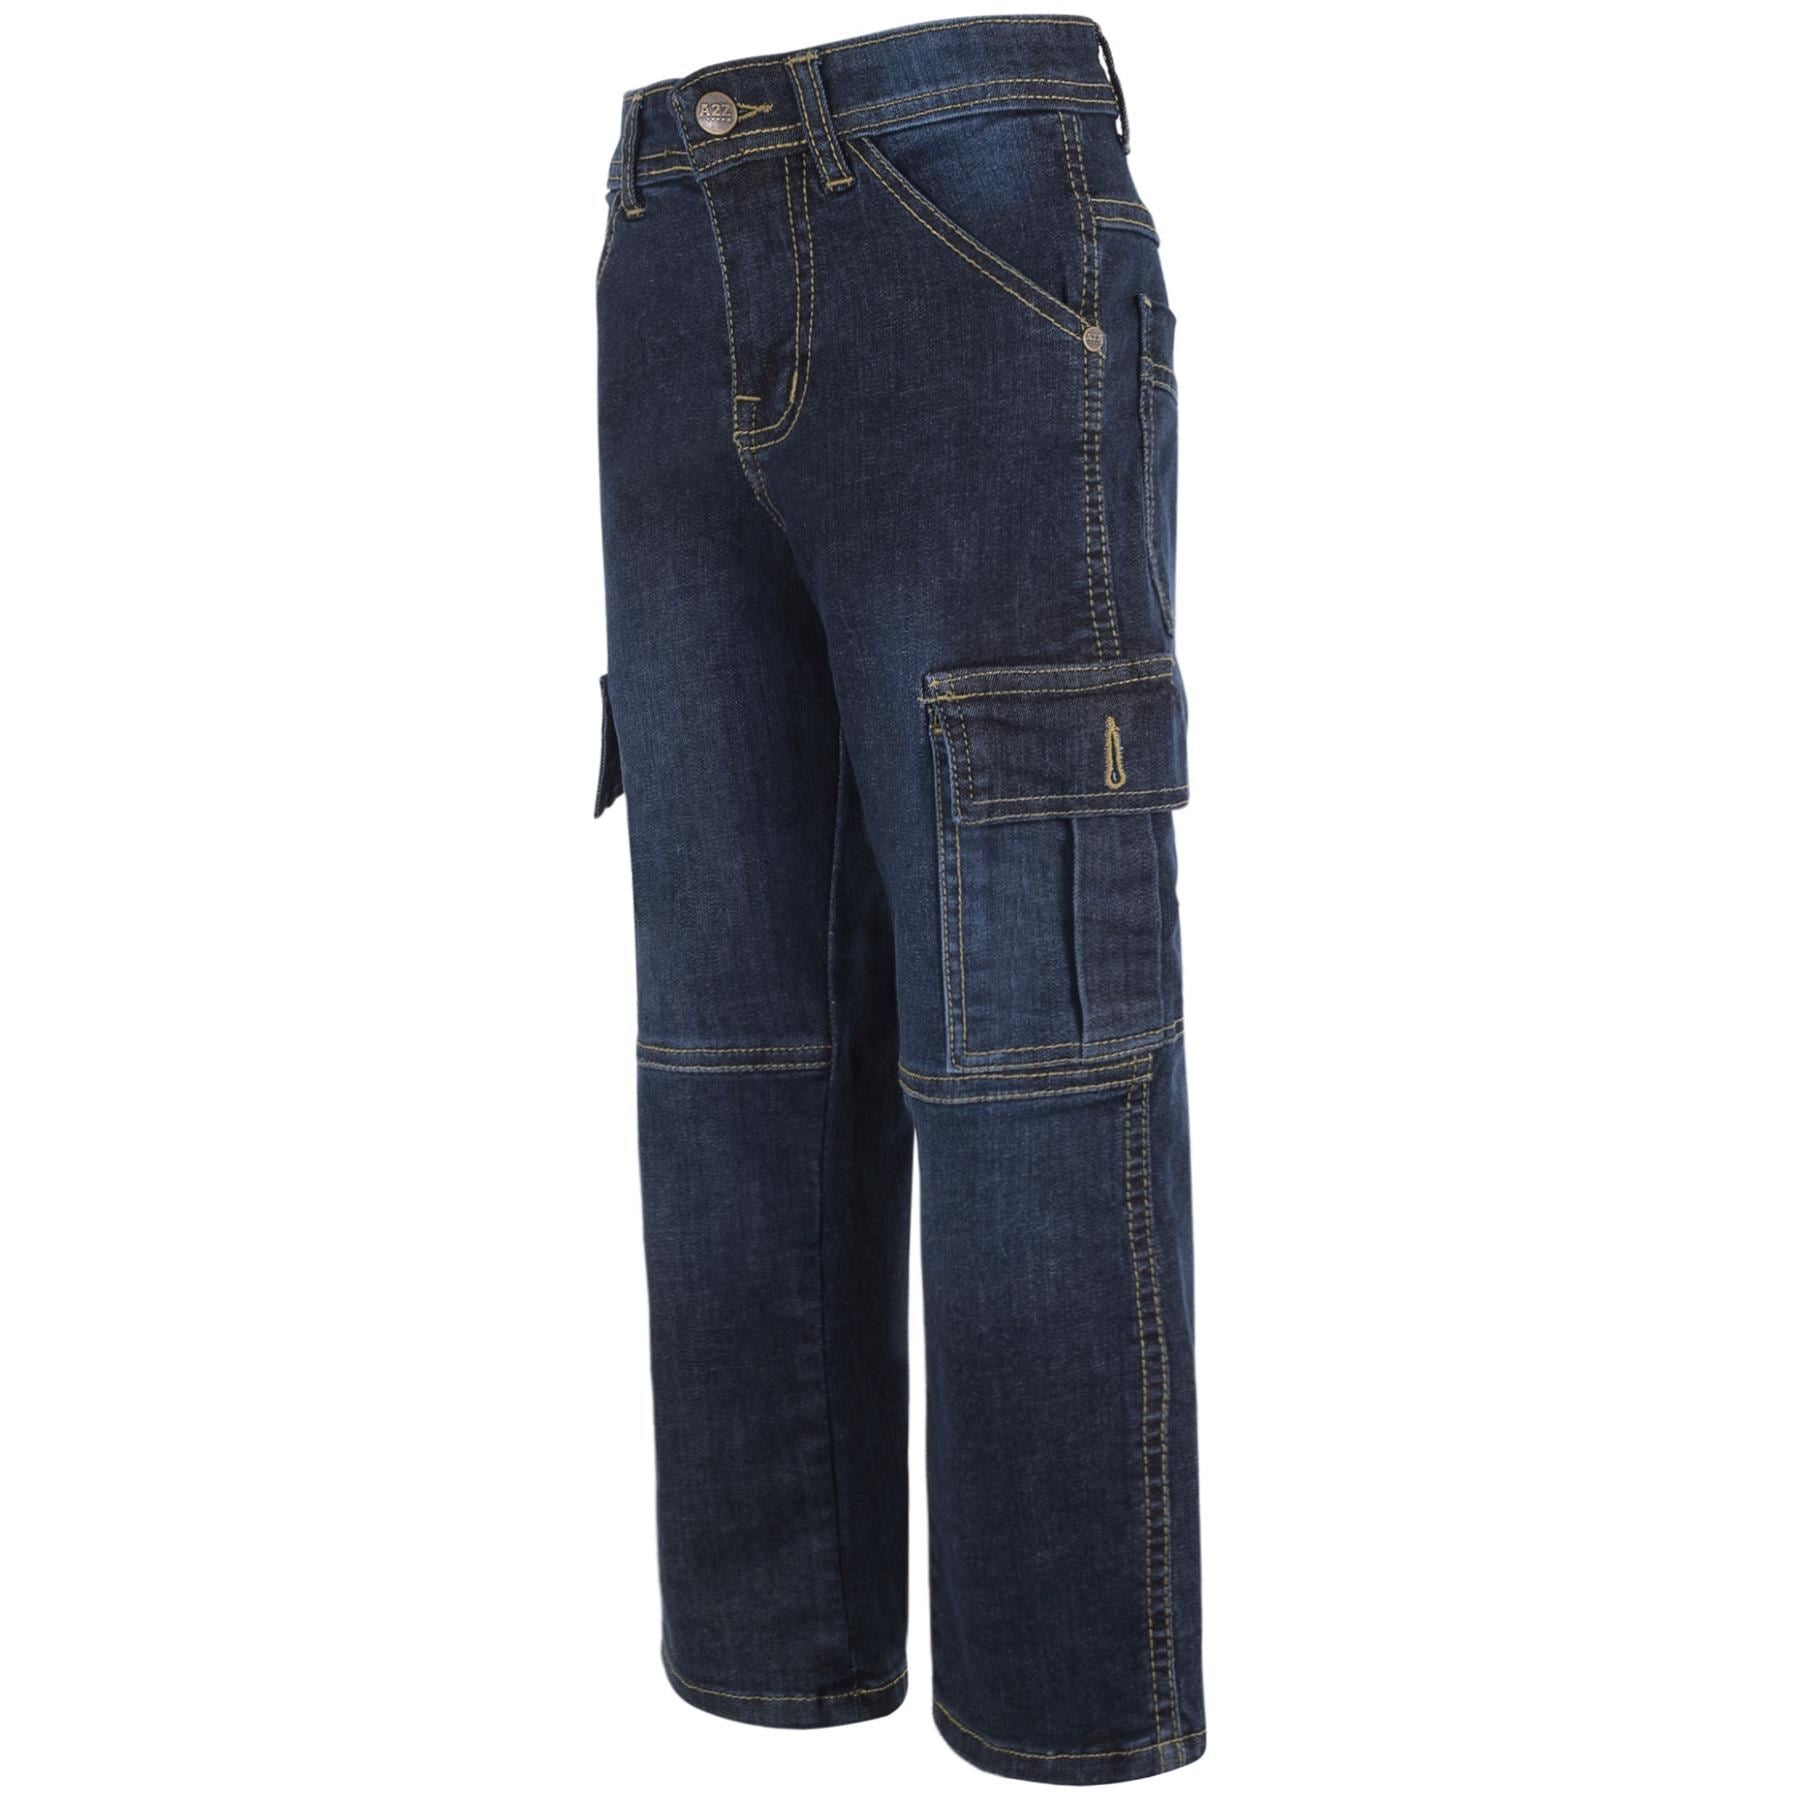 Kids Boys Cargo Denim Pant Stylish 6 Pocket Denim Jeans Stretchy Comfort Pant